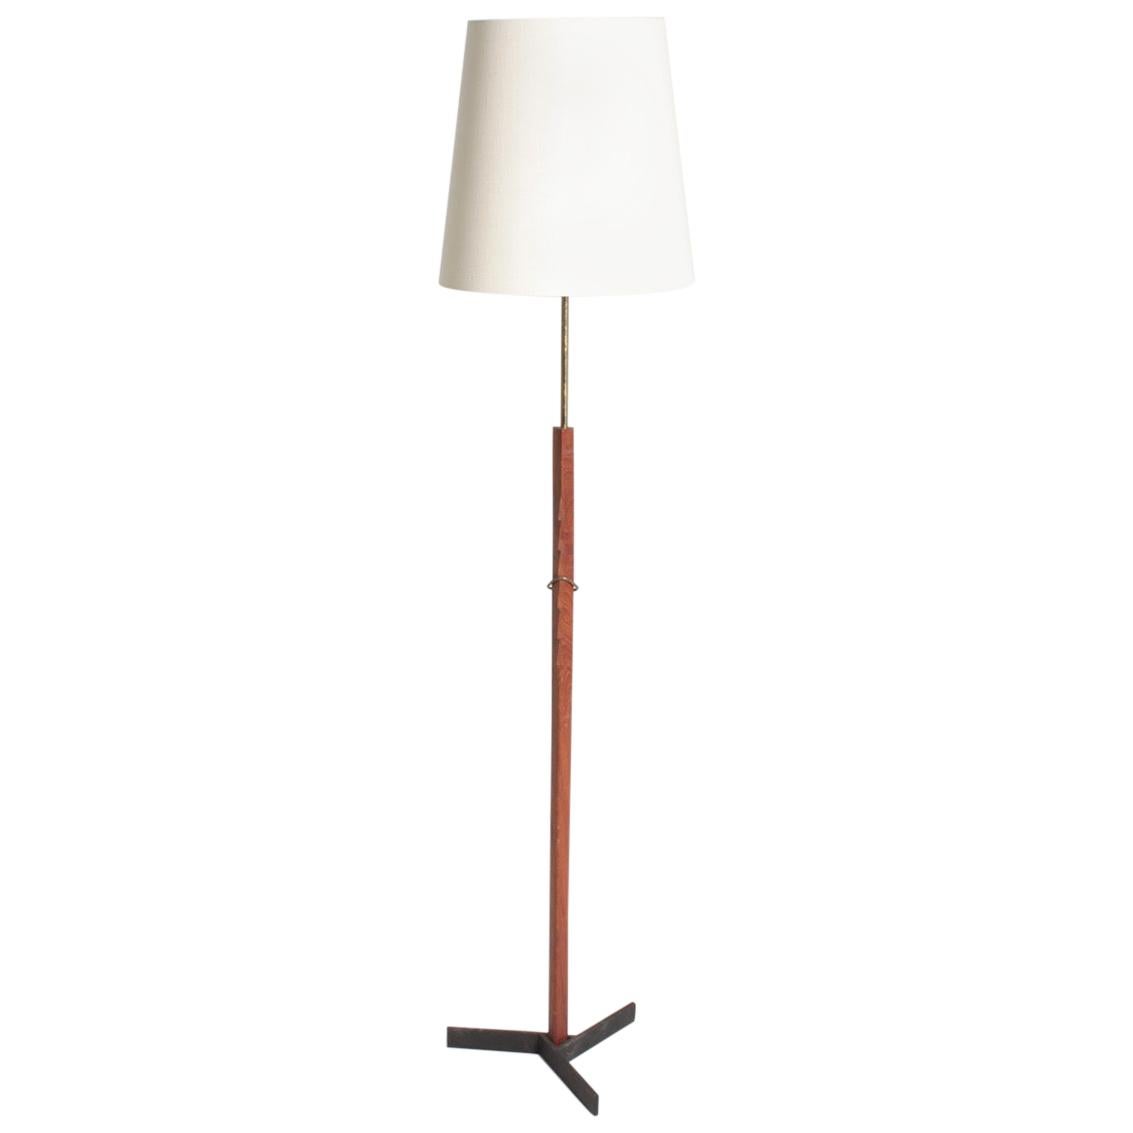 Midcentury Floor Lamp in Teak and Brass by Holm Sorensen, Danish Design, 1950s